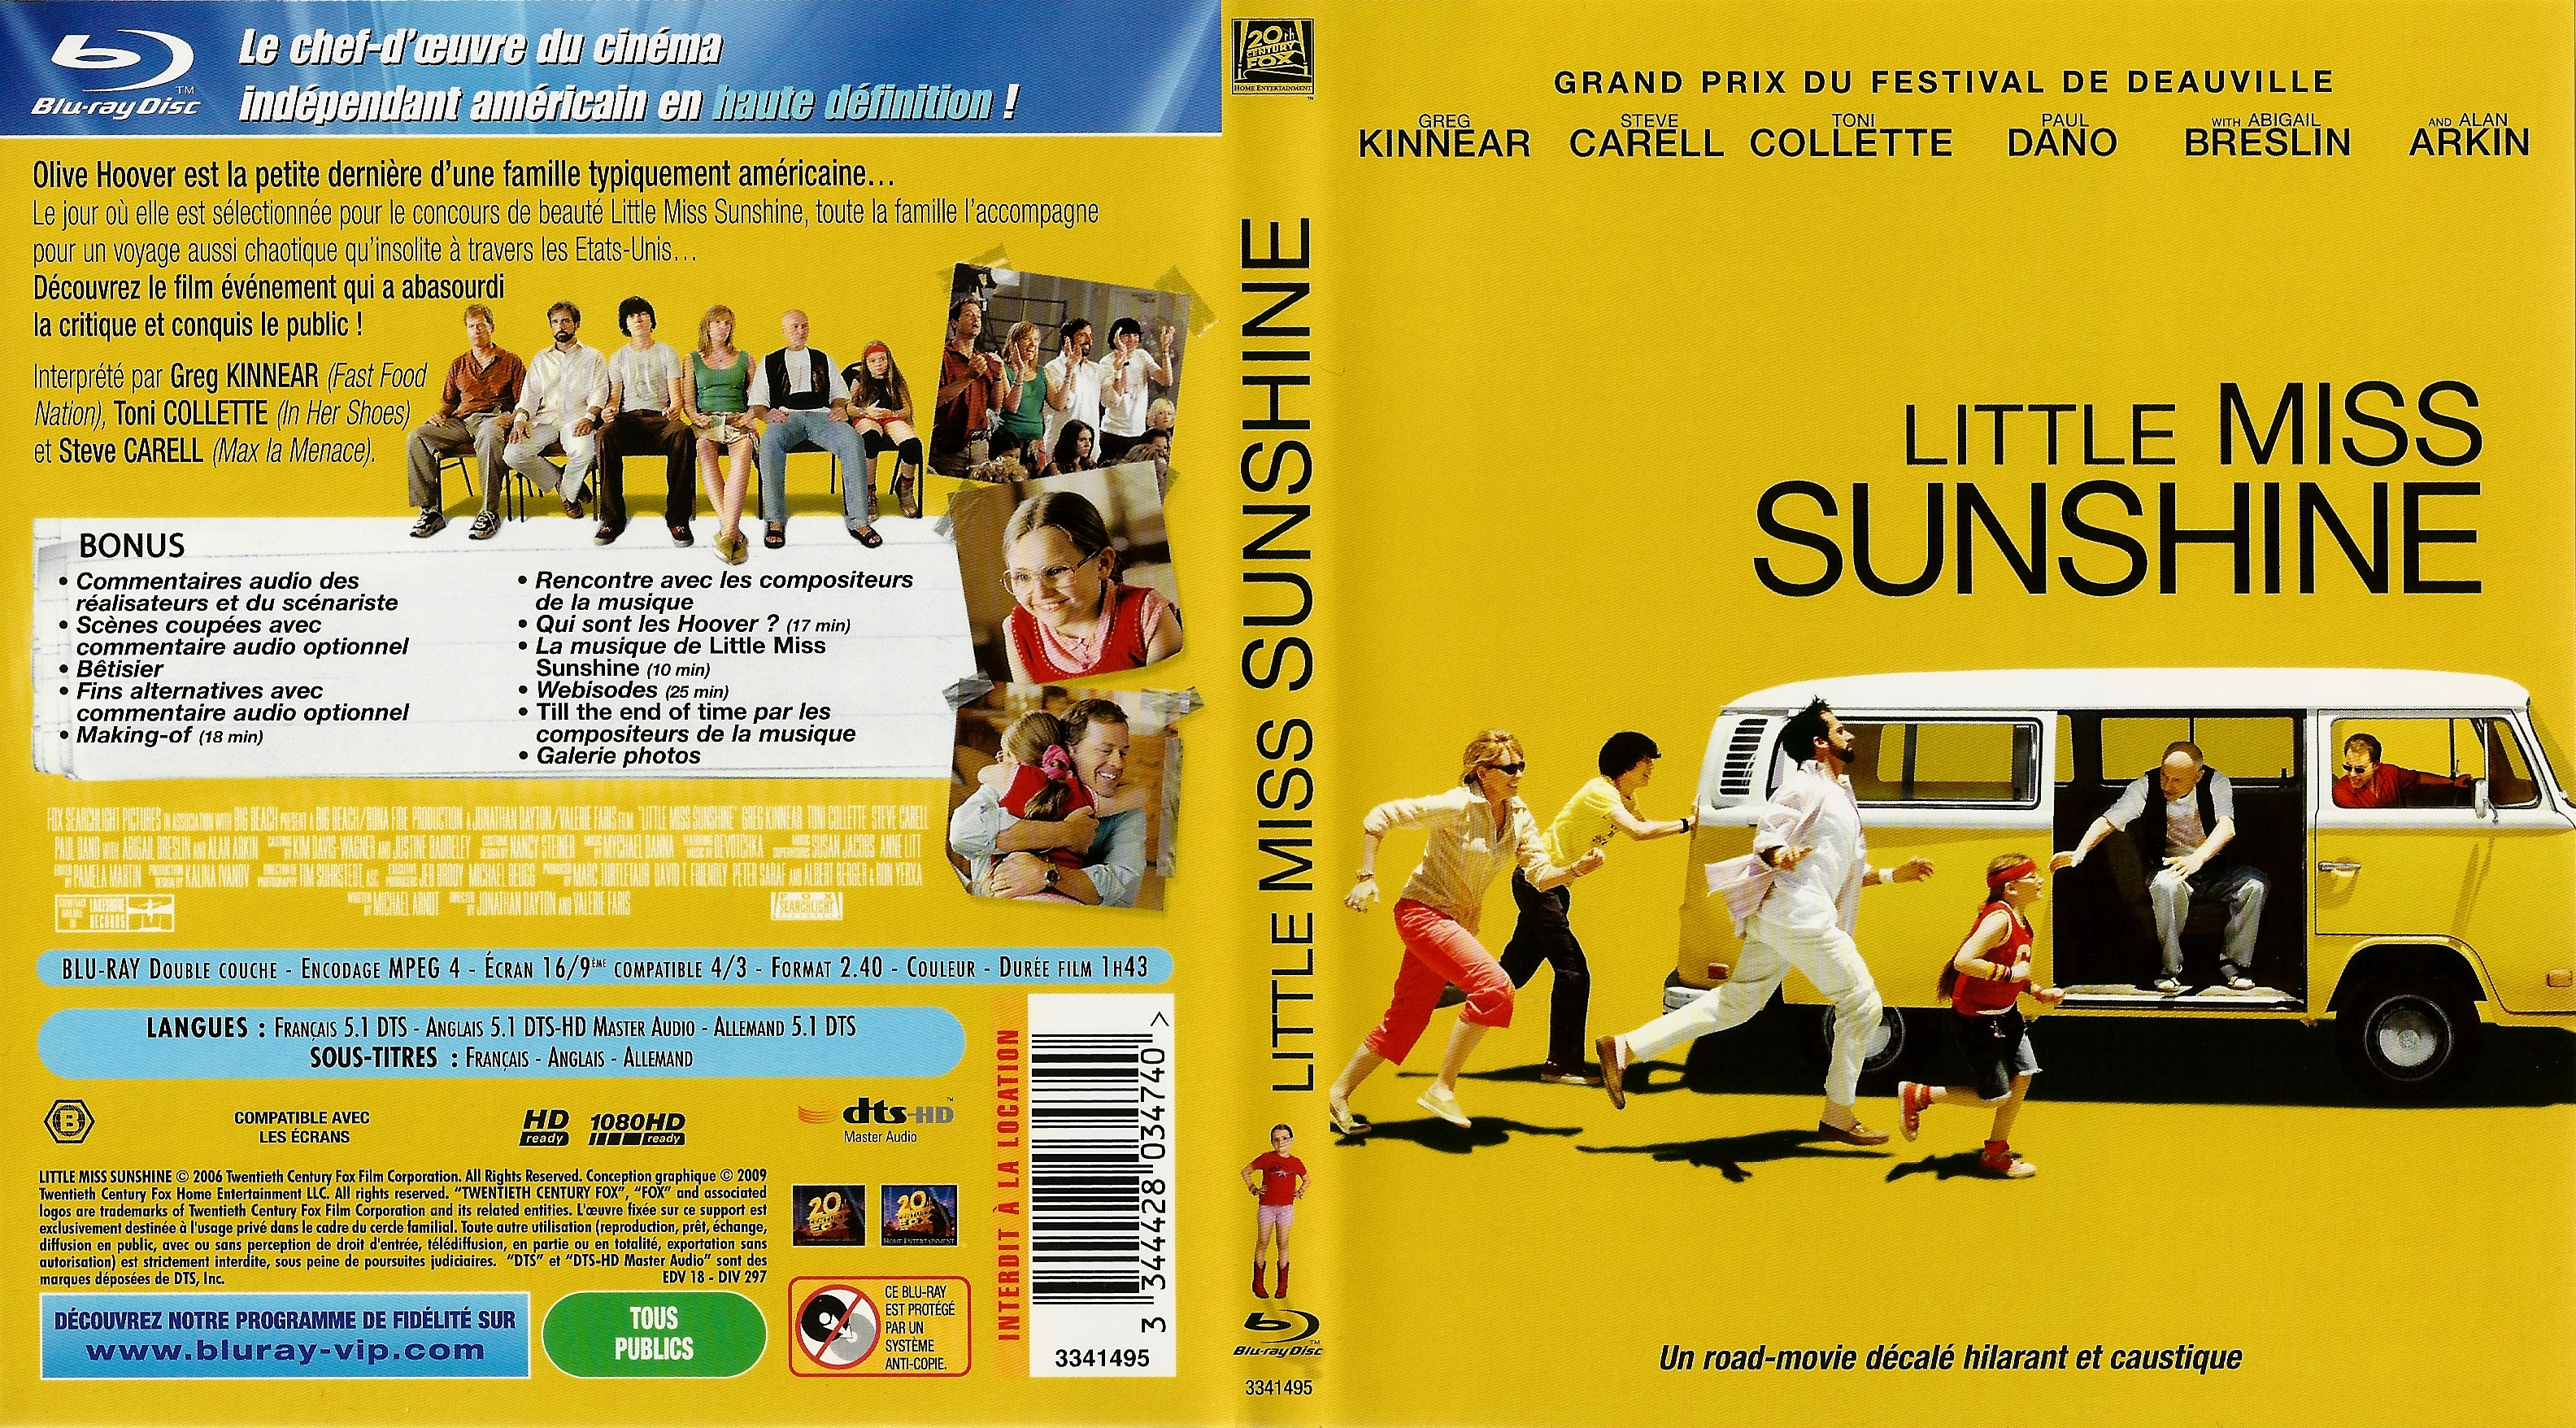 Jaquette DVD Little miss sunshine (BLU-RAY)